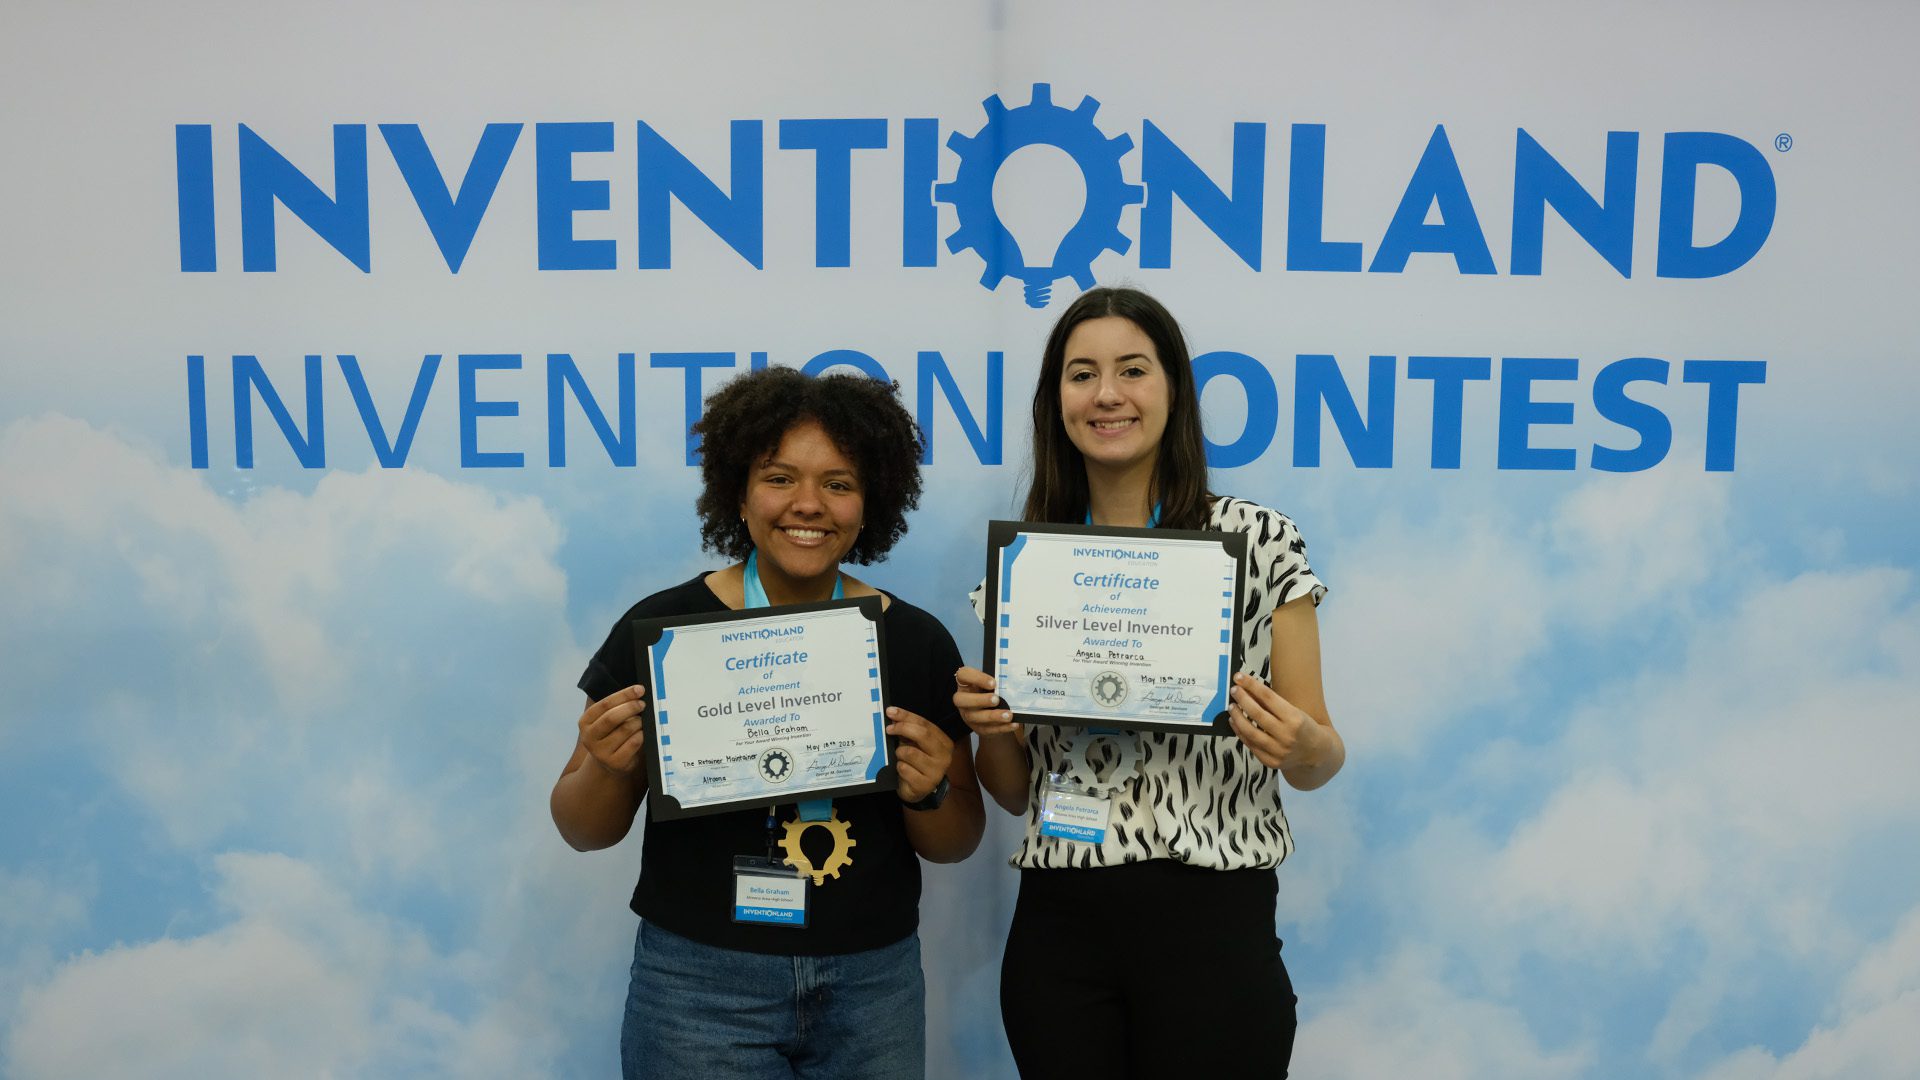 Inventionland Education Invention Contest Winning Teams